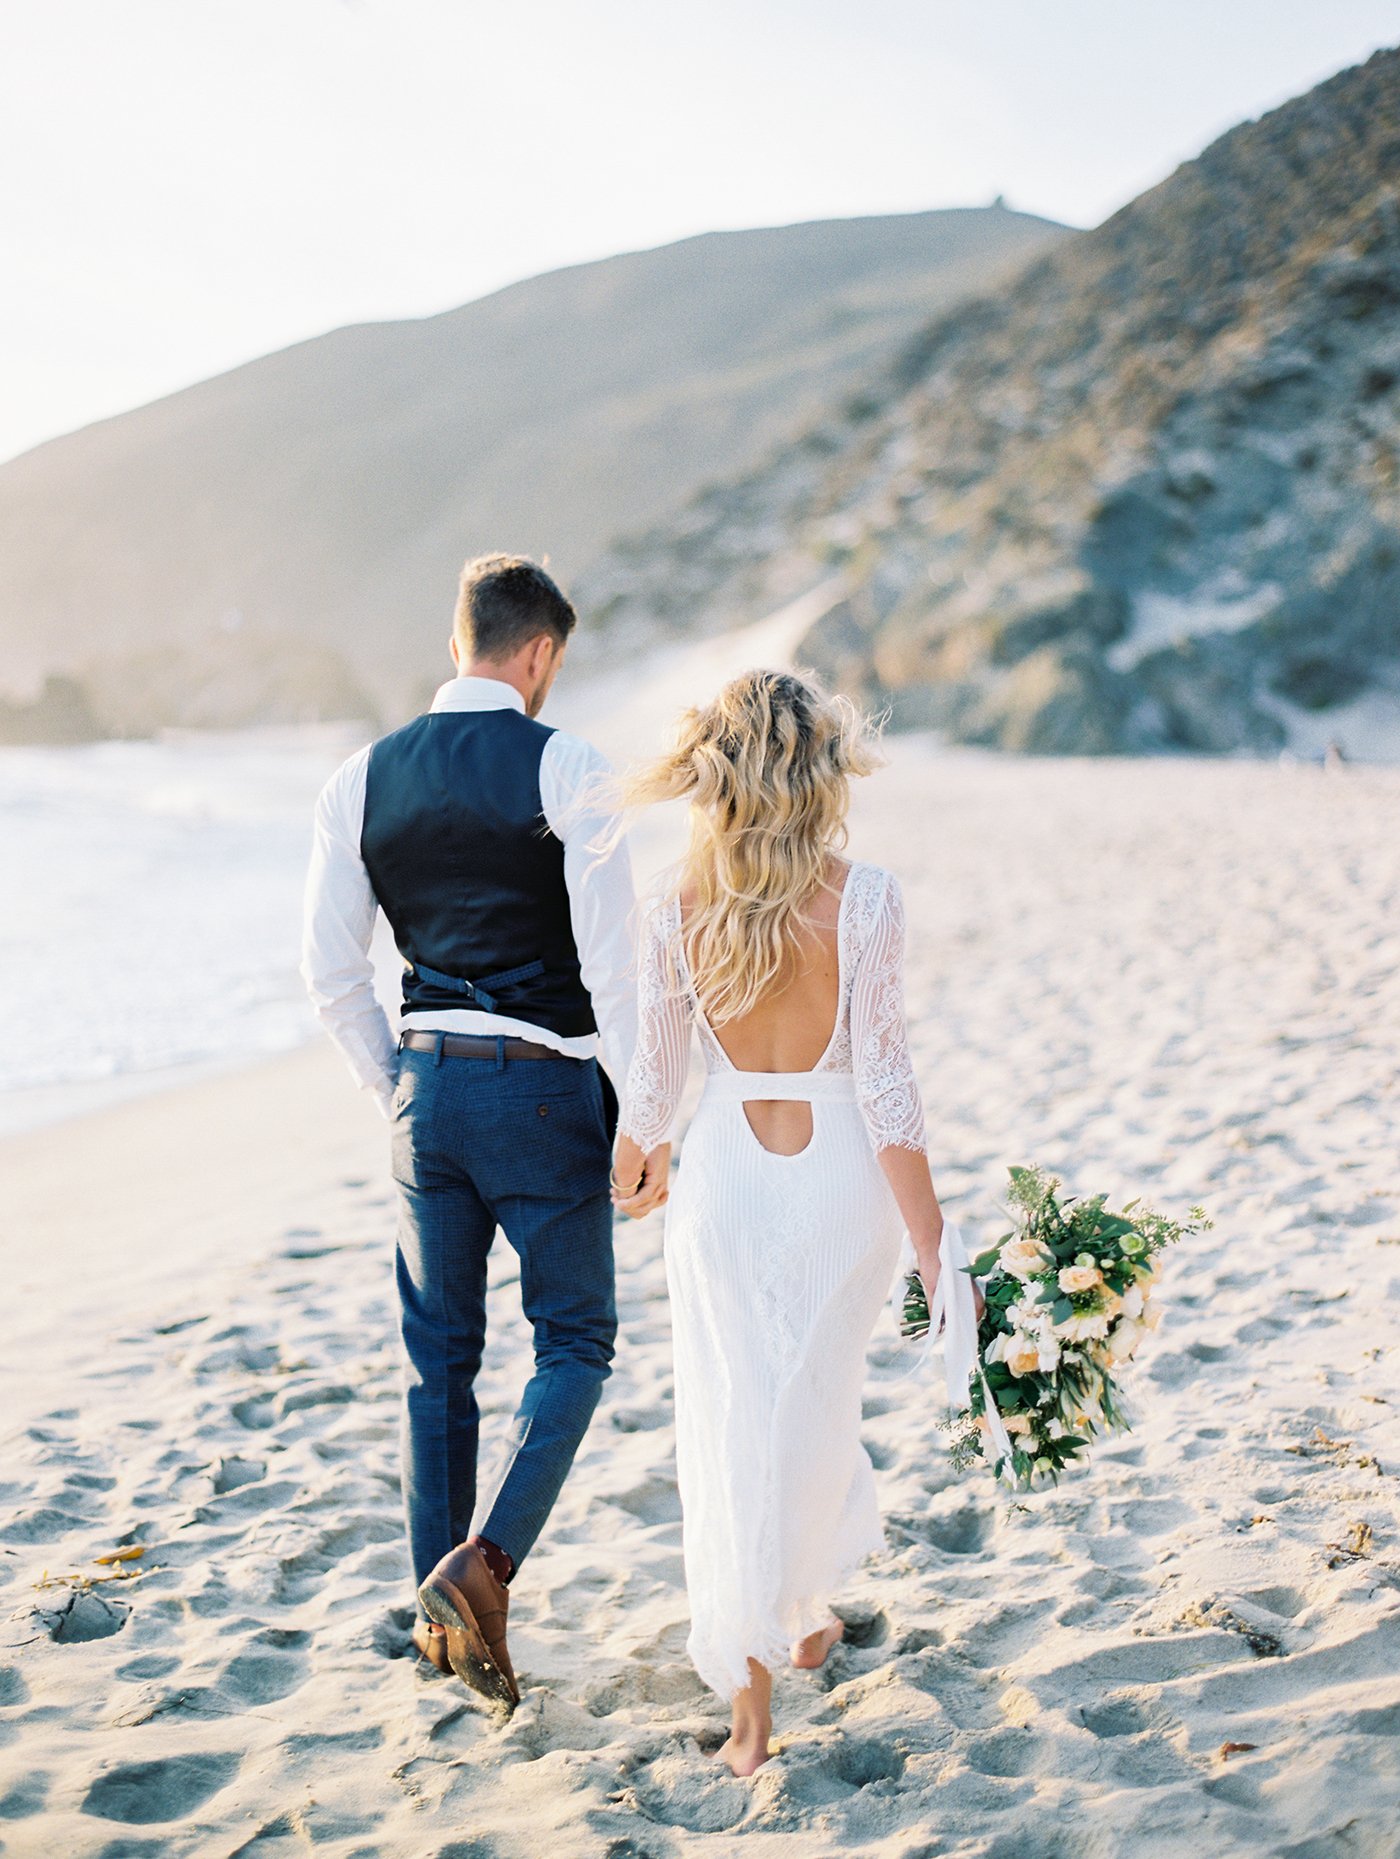 свадьба берегу моря